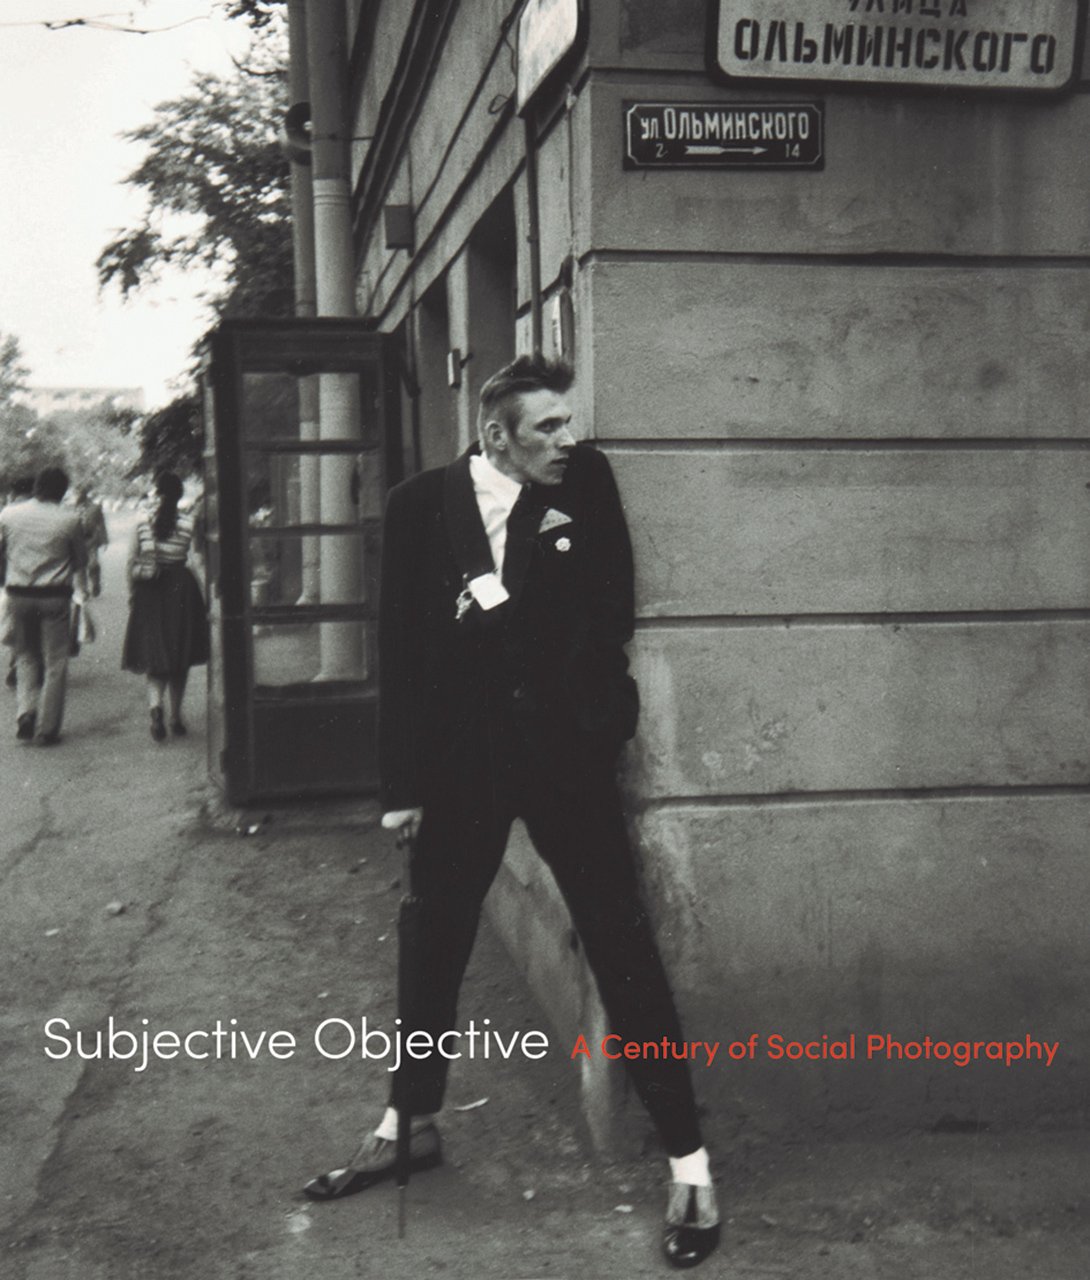 Subjective Objective - A Century of Social Photography | D. Gutstafson